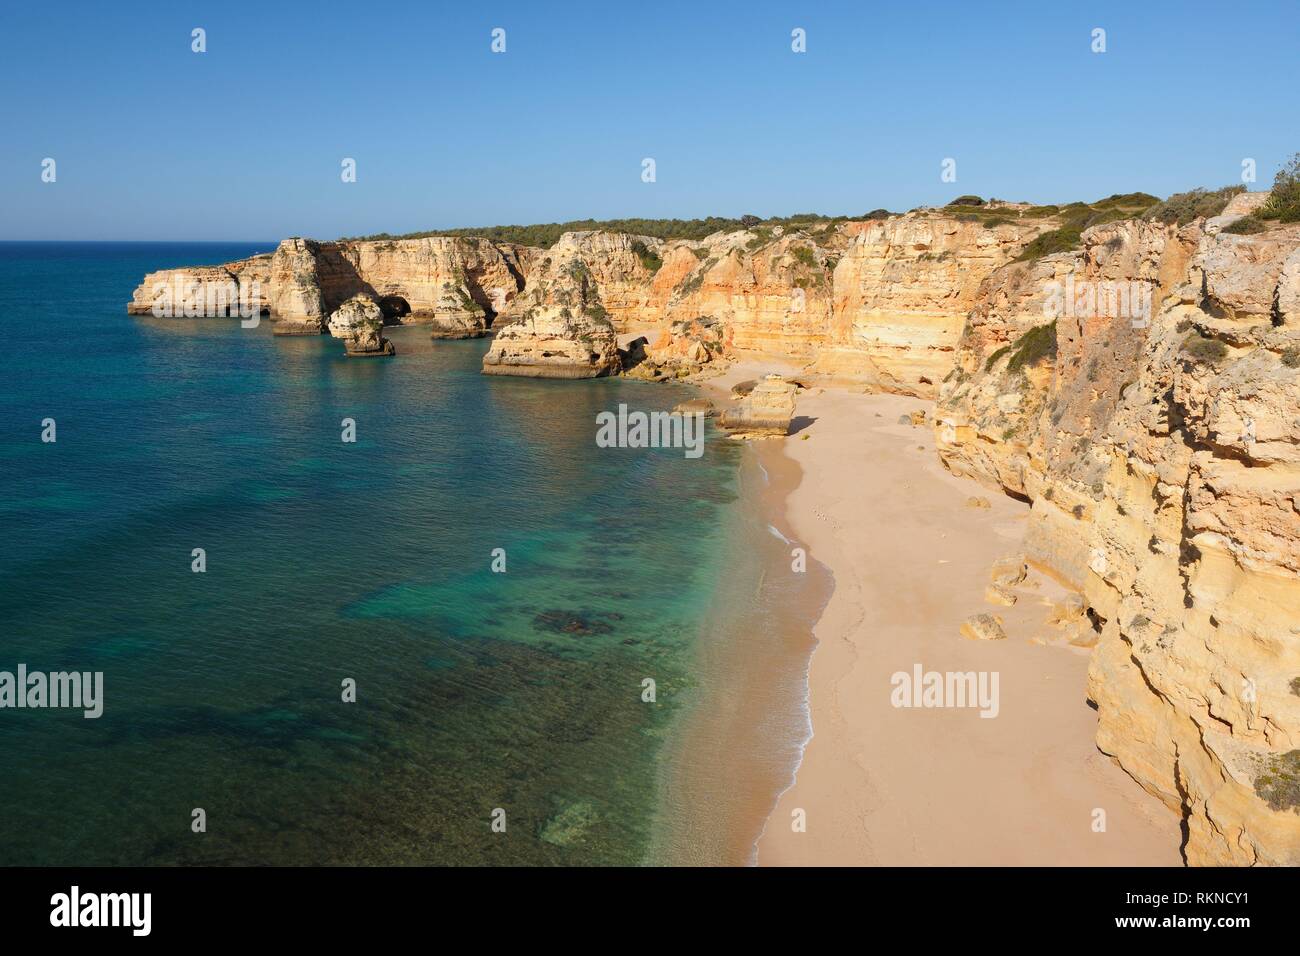 Praia da Marinha (Marinha Beach). Beach with spectacular rocks. Benagil, Lagoa, Faro, Portimao, Algarve, Portugal, Atlantic Ocean. Stock Photo